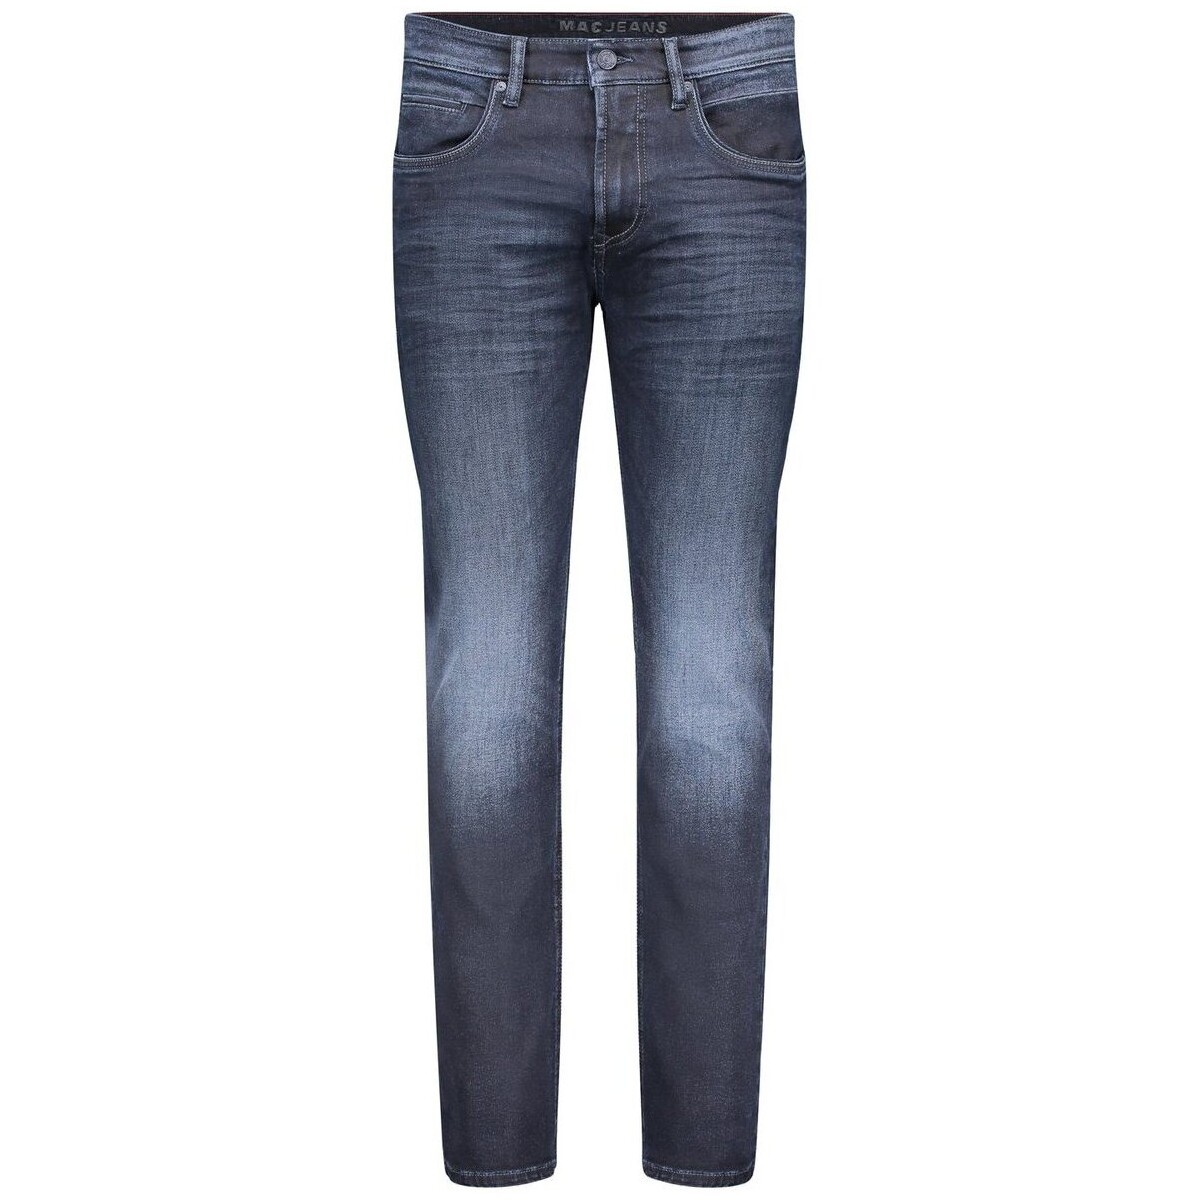 Kleidung Herren Jeans Mac Accessoires Bekleidung Arne Pipe 1973L051700/H793 Blau